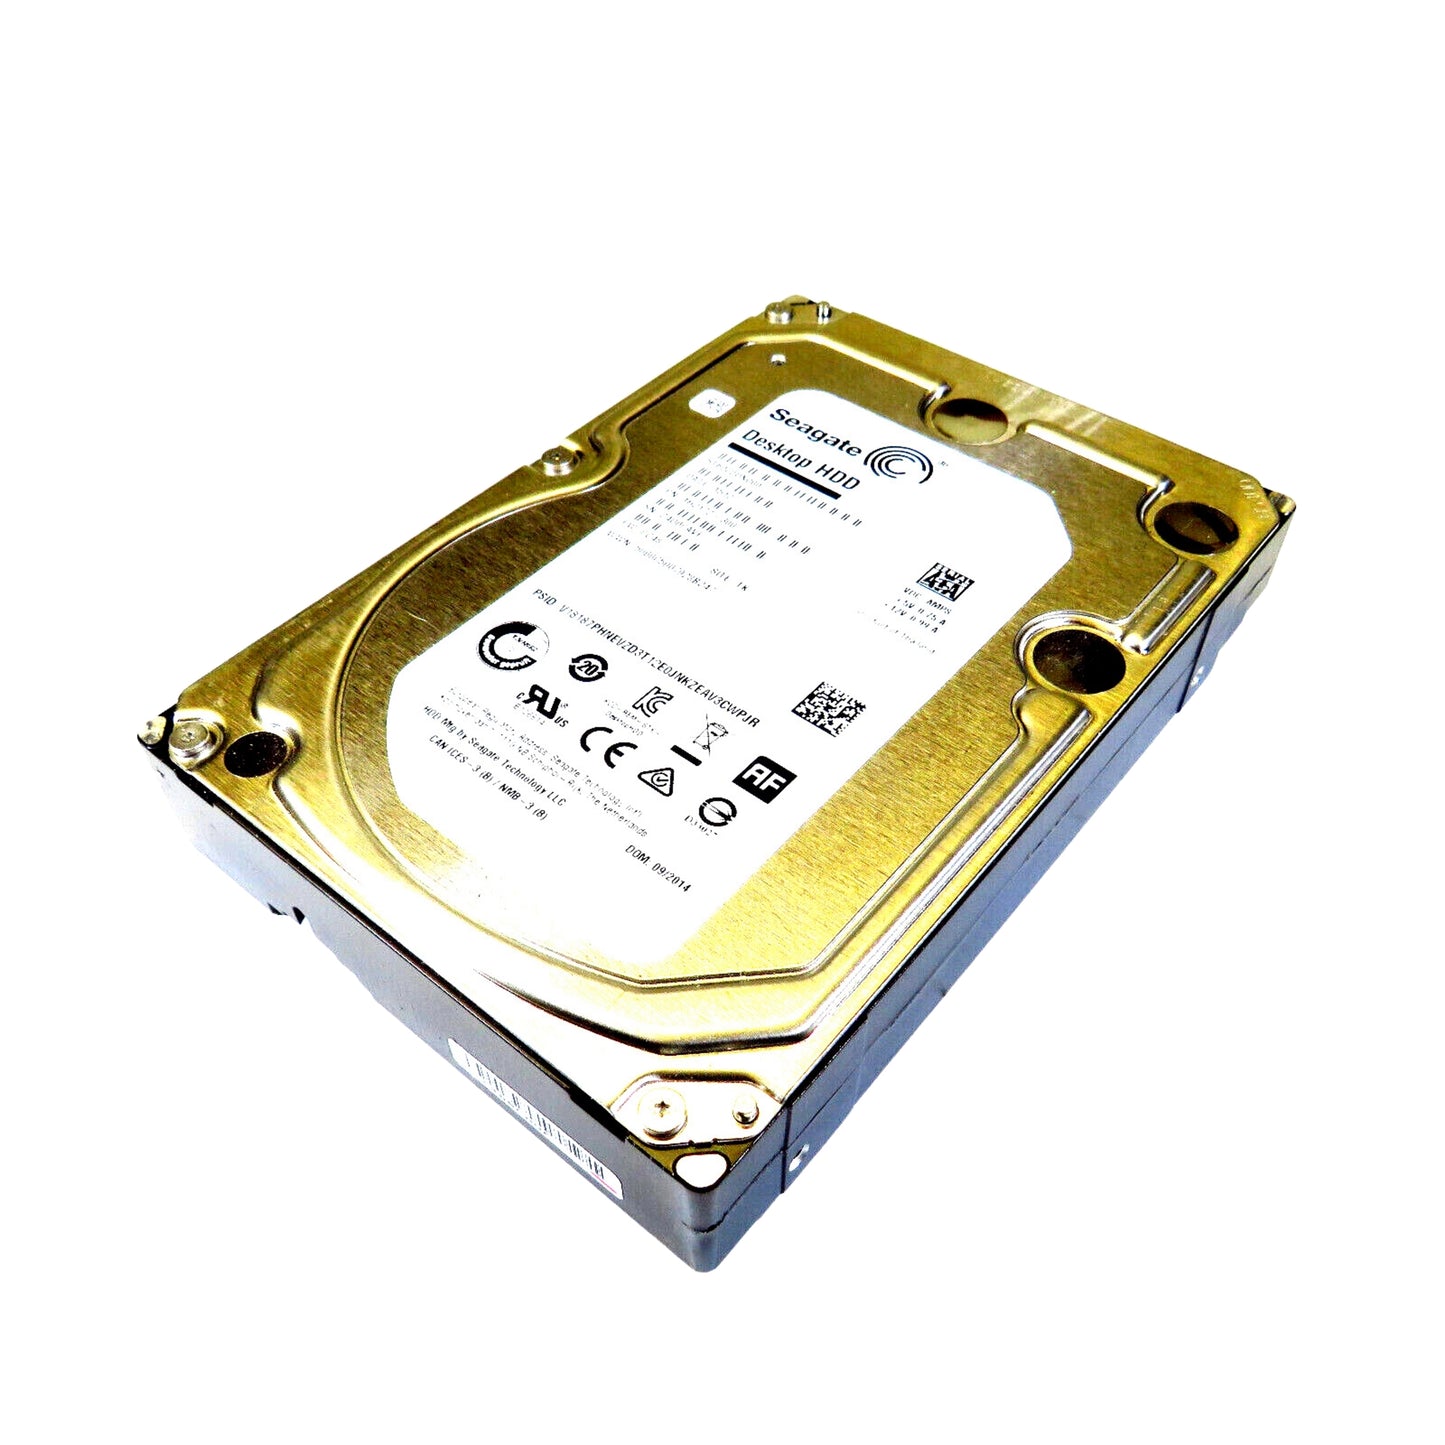 Seagate ST6000DX000 3.5" 6TB 7200RPM SATA III Hard Disk Drive (HDD), Silver (Refurbished)